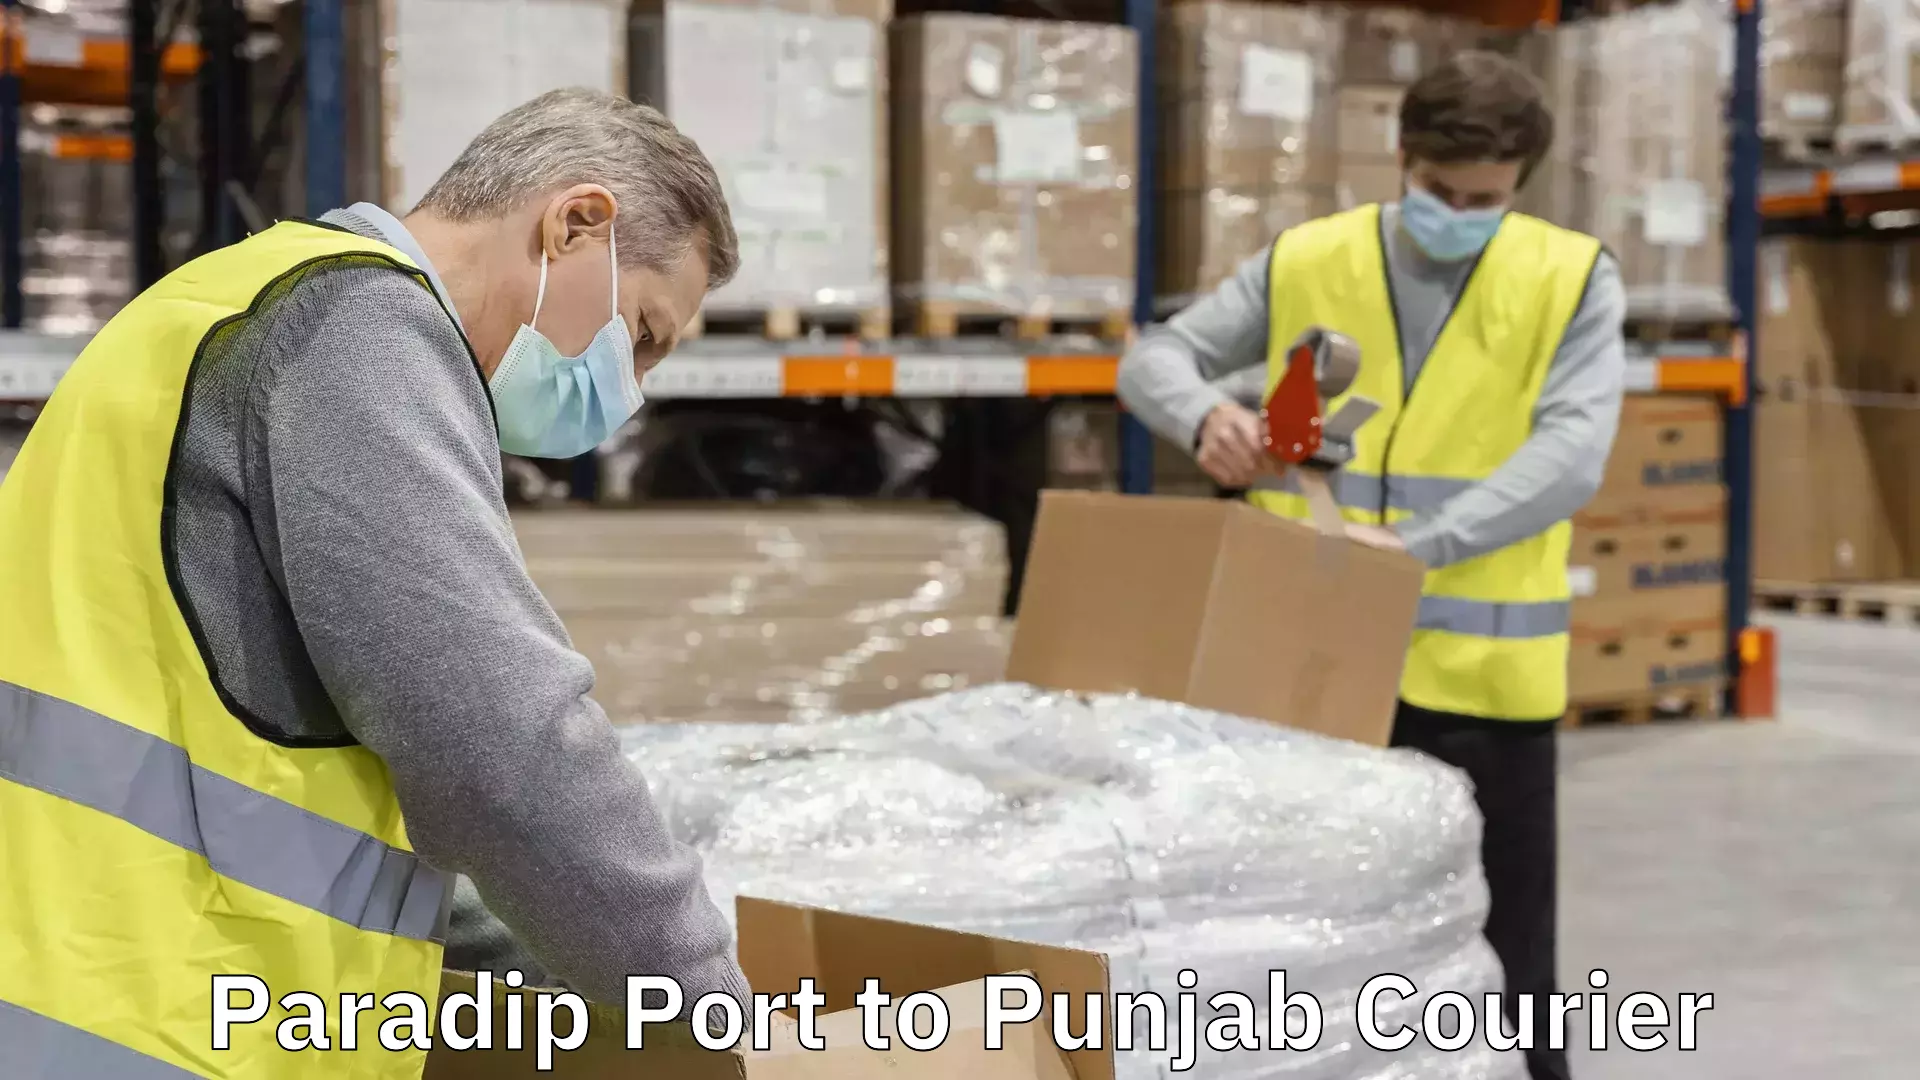 24-hour courier service Paradip Port to Punjab